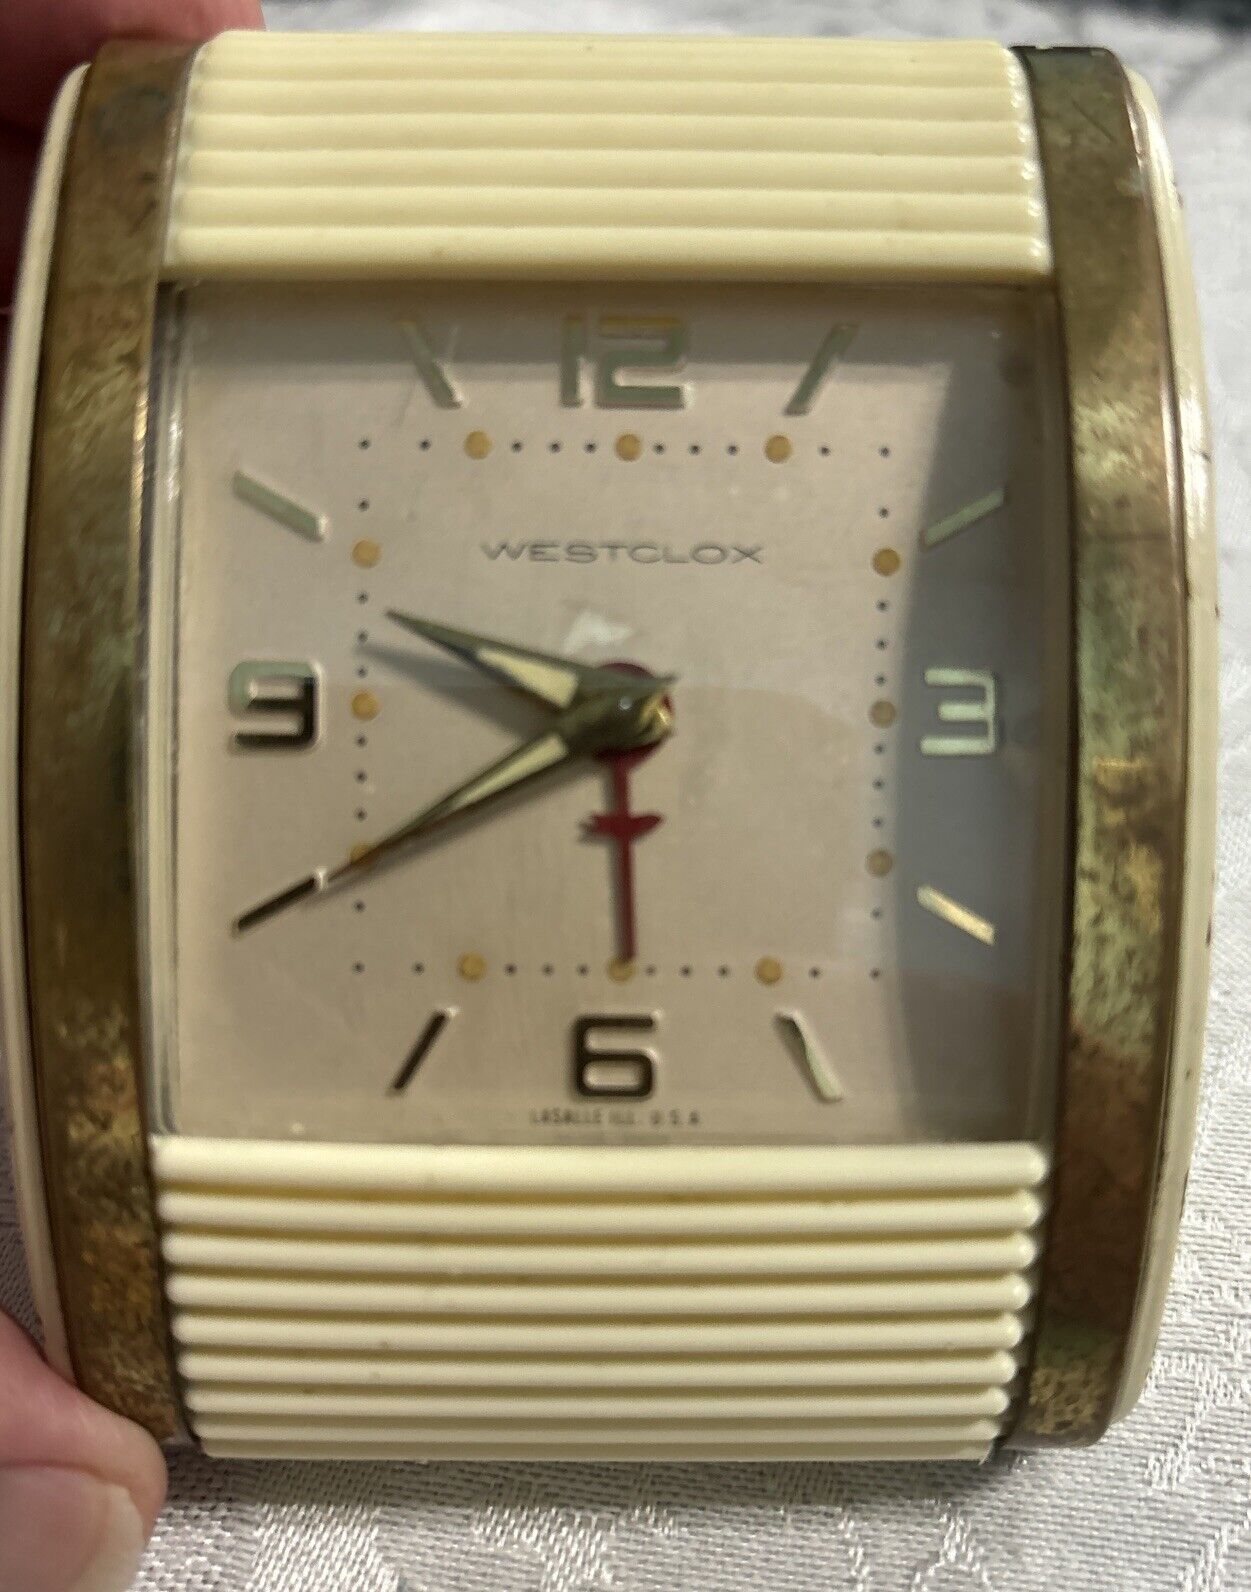 Antique Rare 1920s Westclox alarm clock Model Celluloid Stainless Brass Case